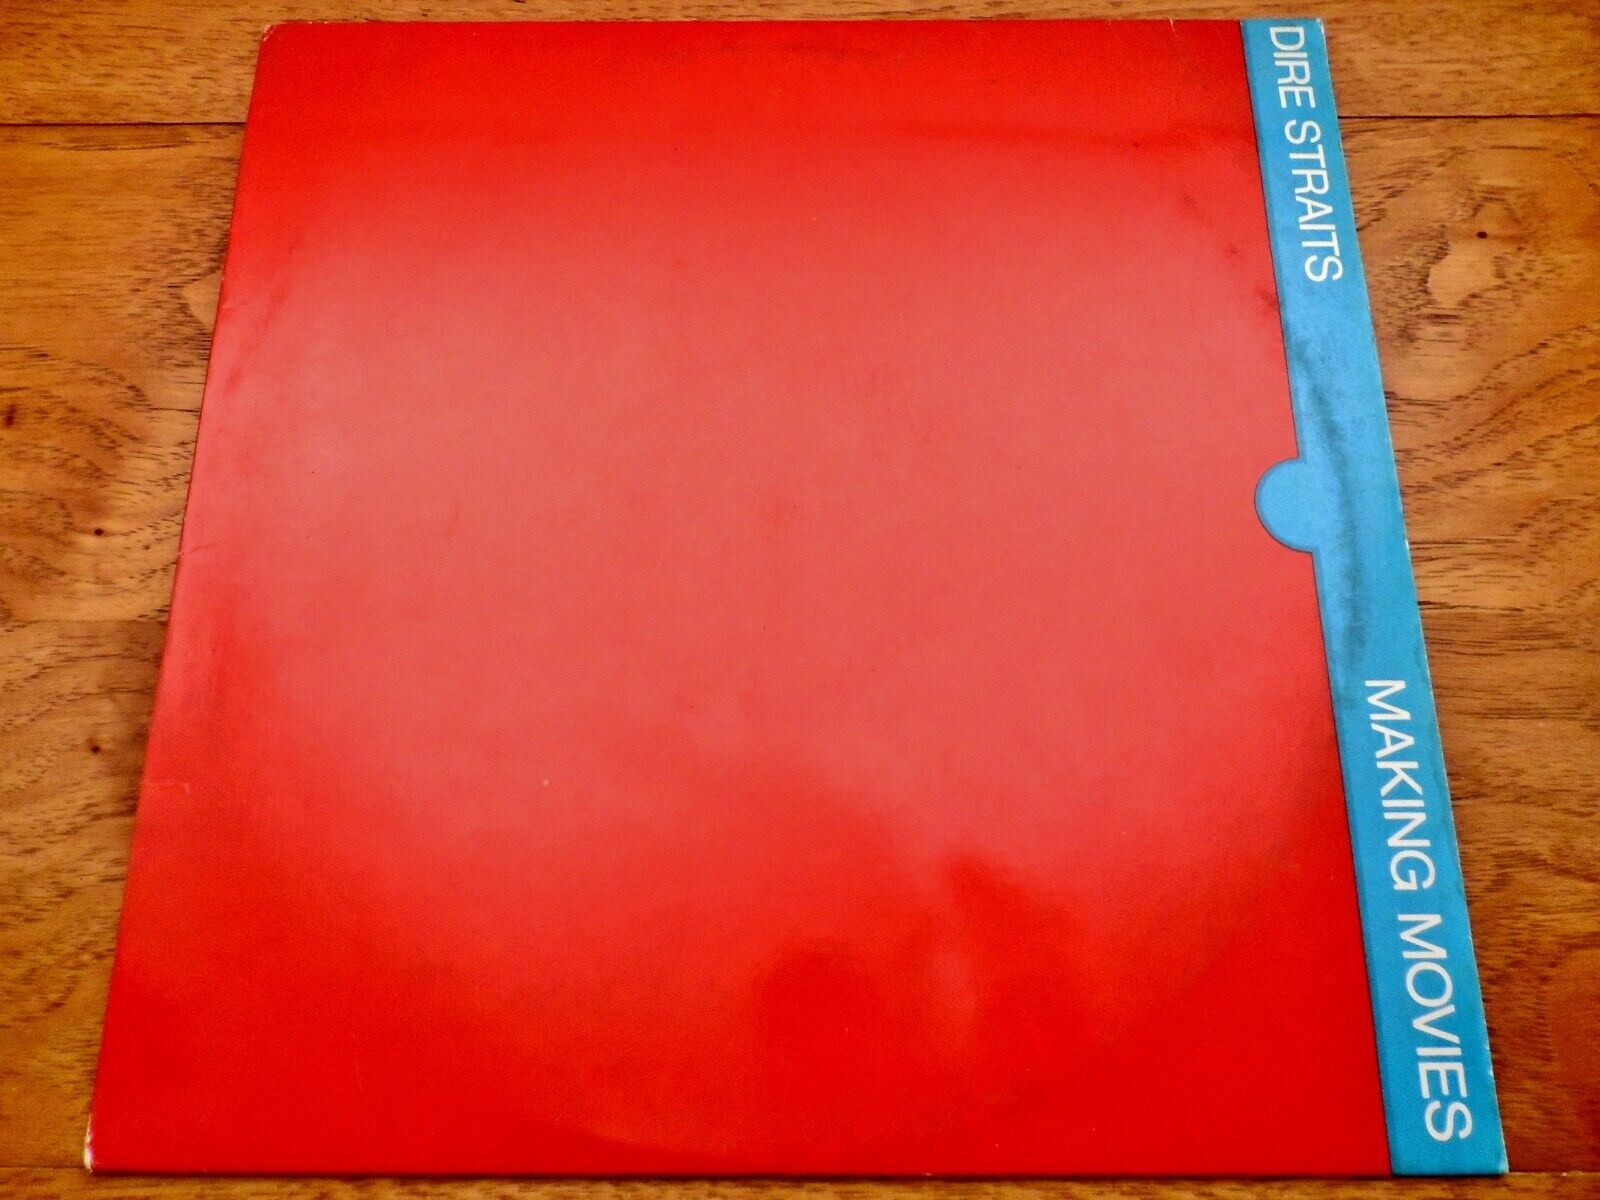 Dire Straits ‎♫ Making Movies ♫ 1980 Warner Bros. Records Orig. Vinyl LP +Insert